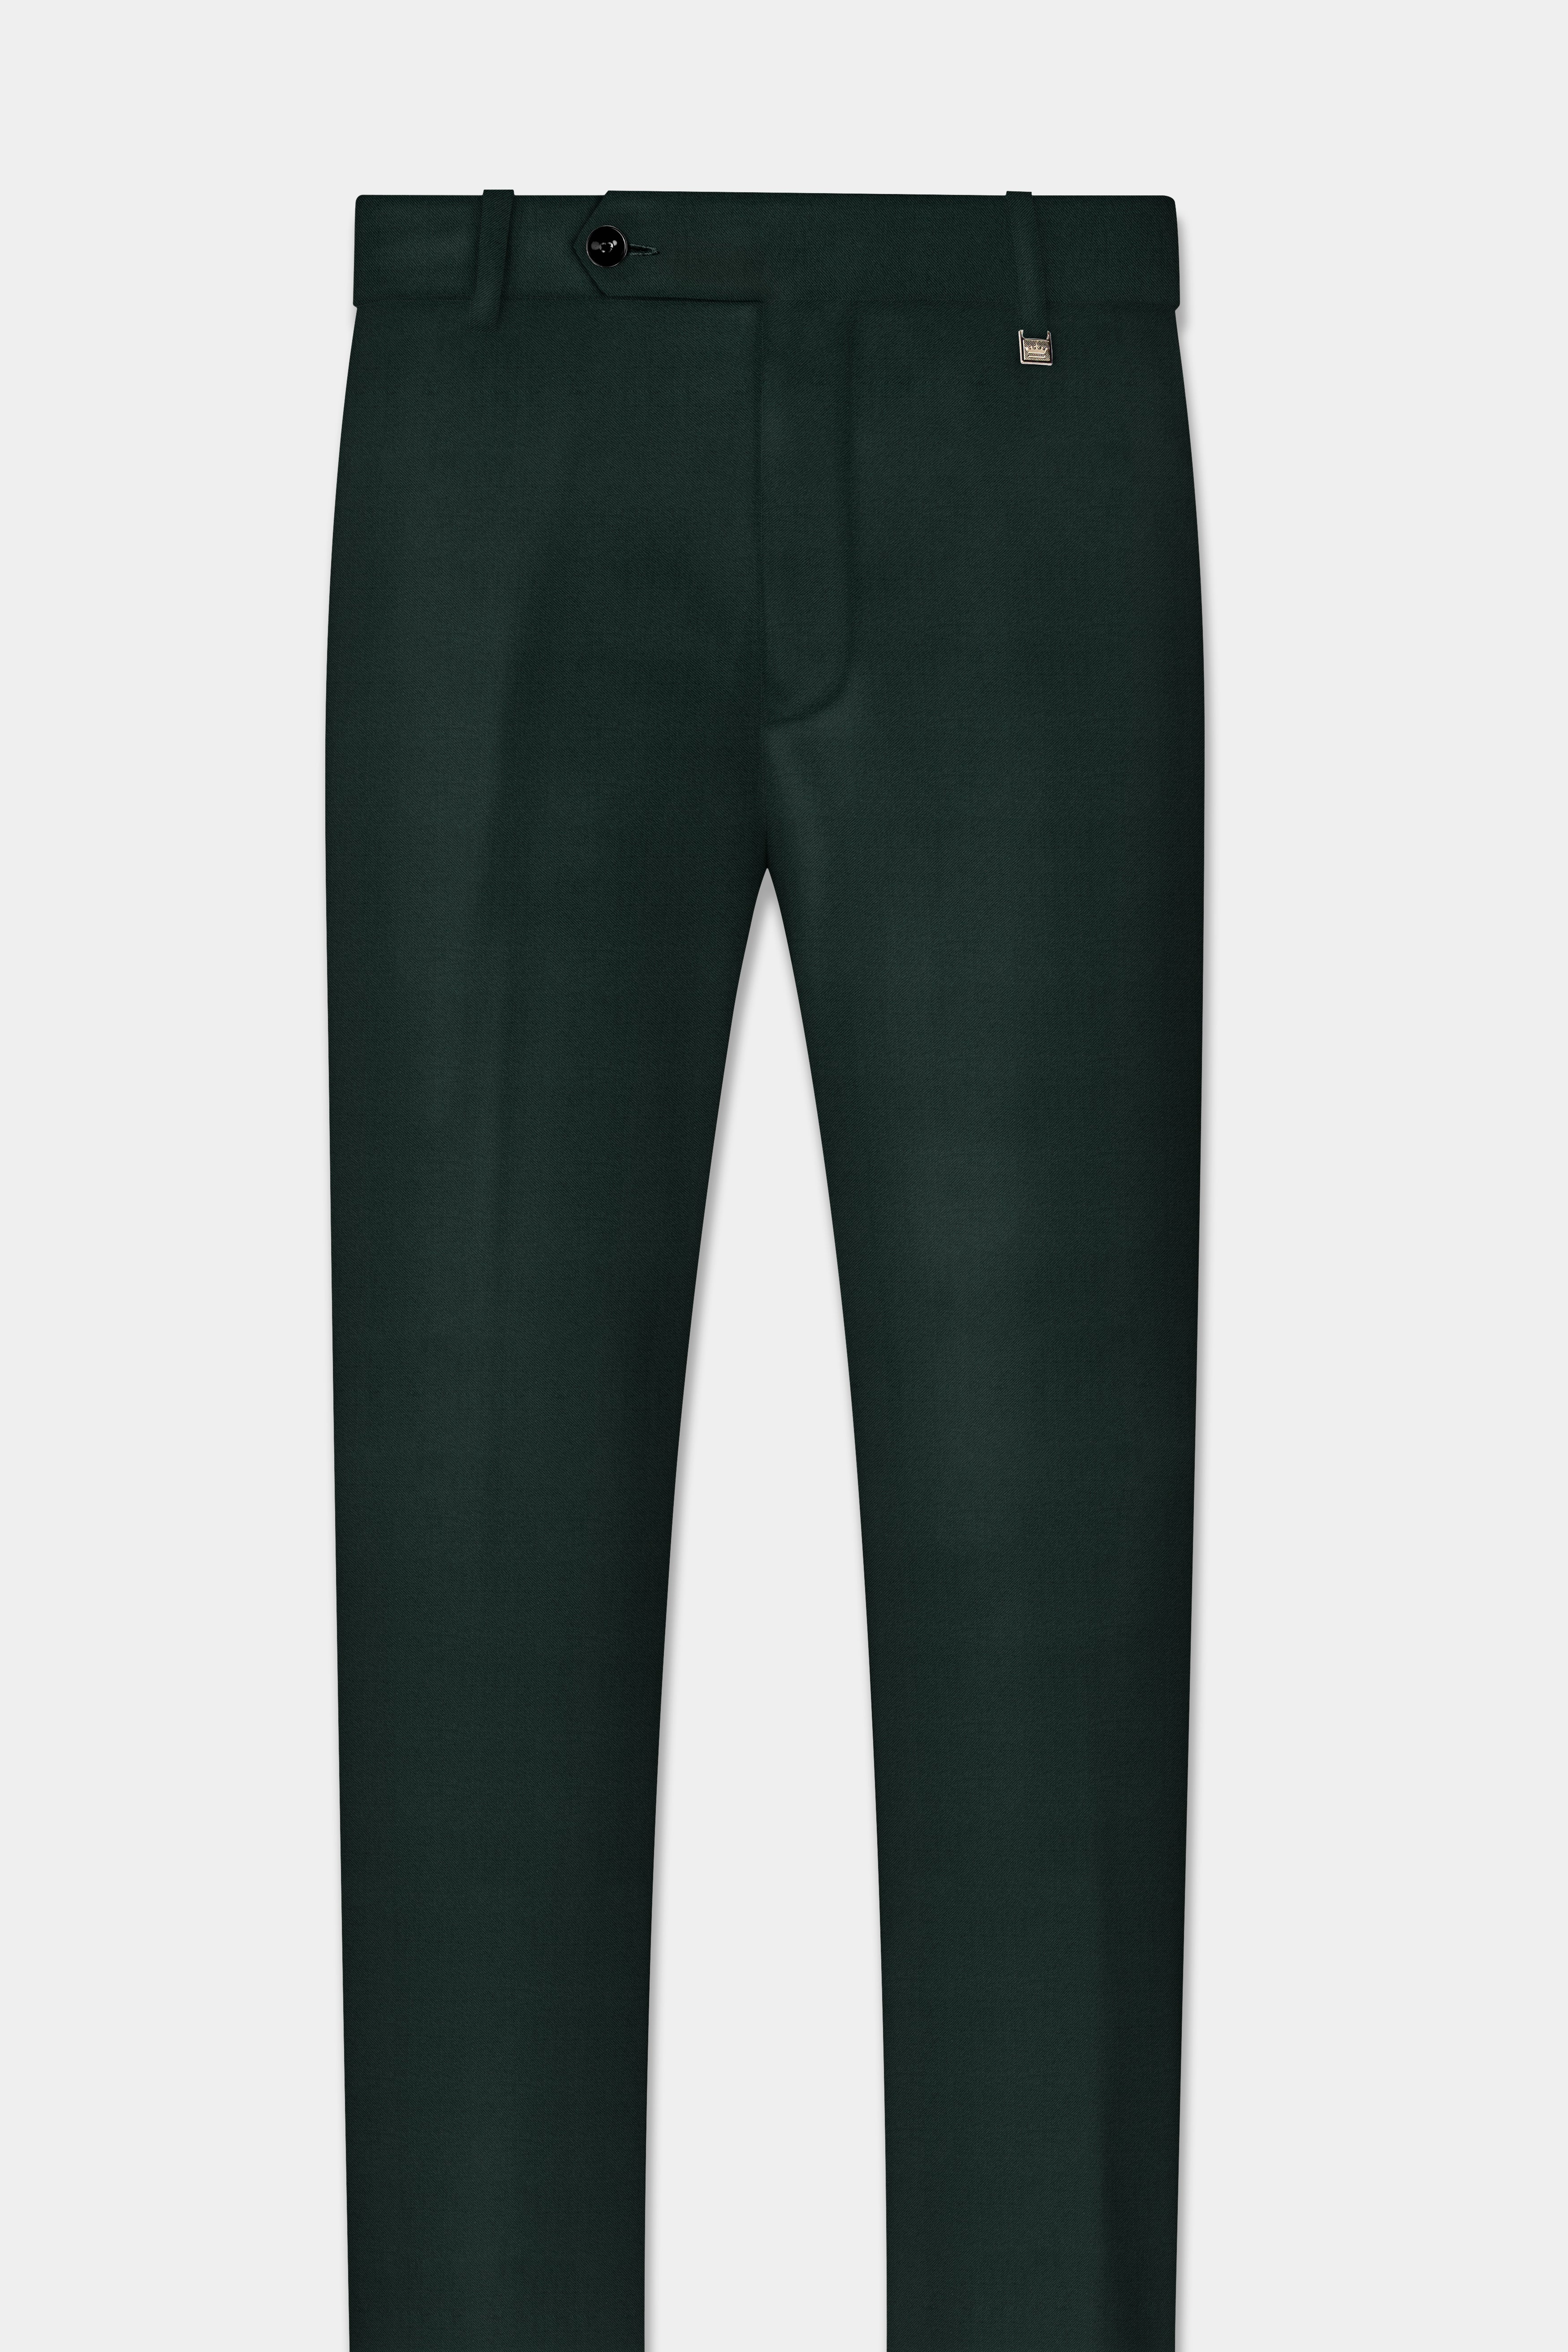 5 Best Ways To Wear Green Formal Shirt Combination Pants | by daisyfashion  | Medium